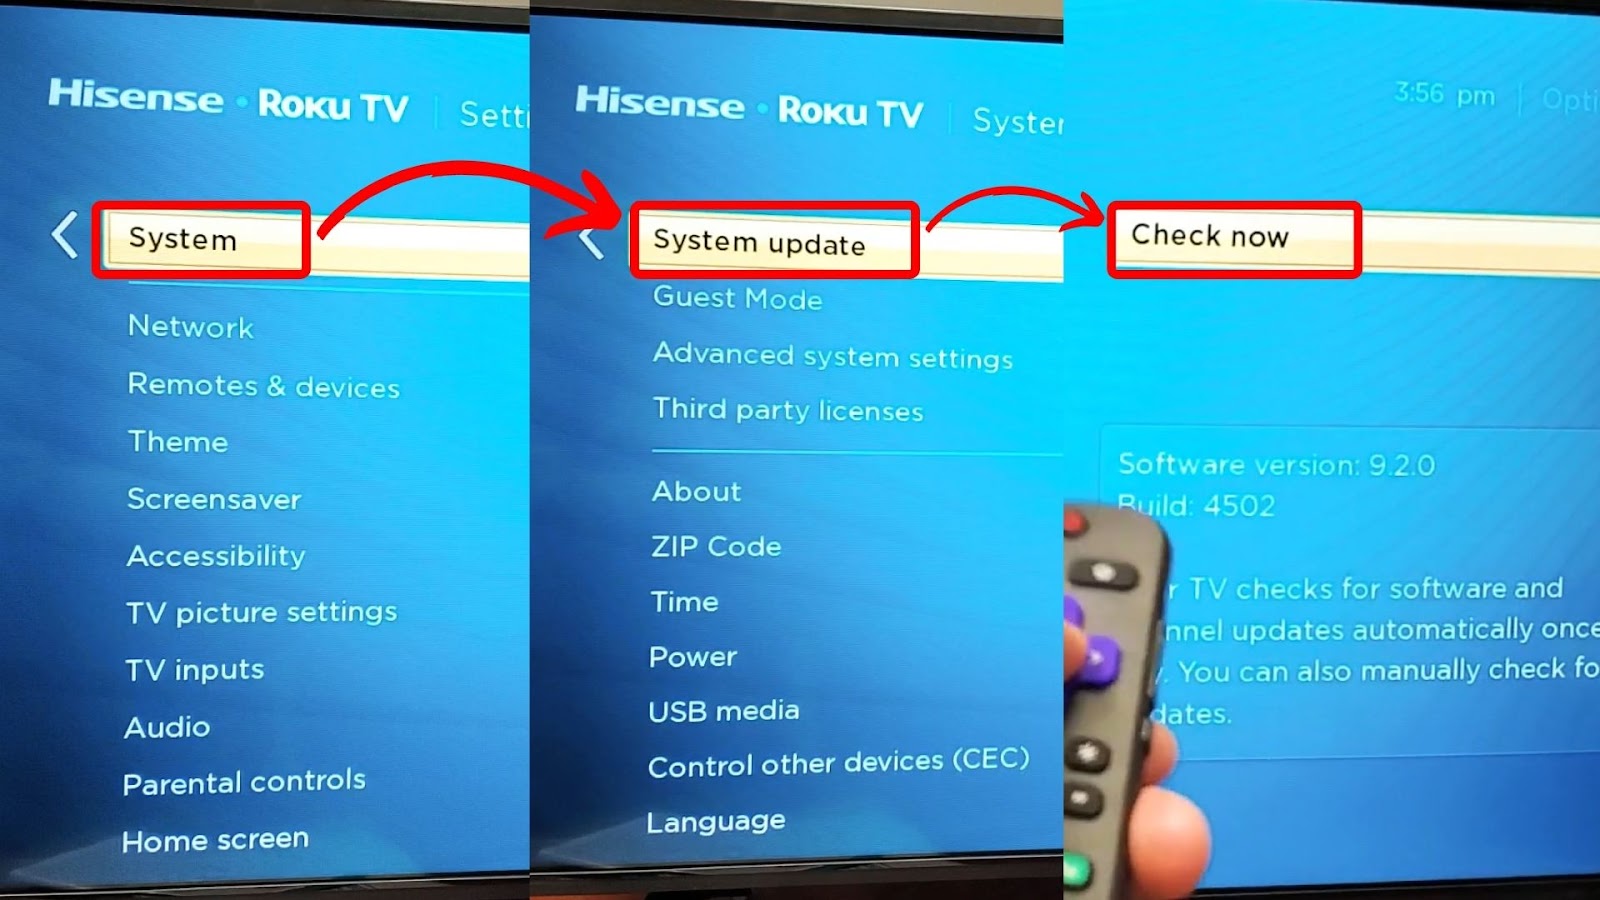 Hisense Roku TV Update Software